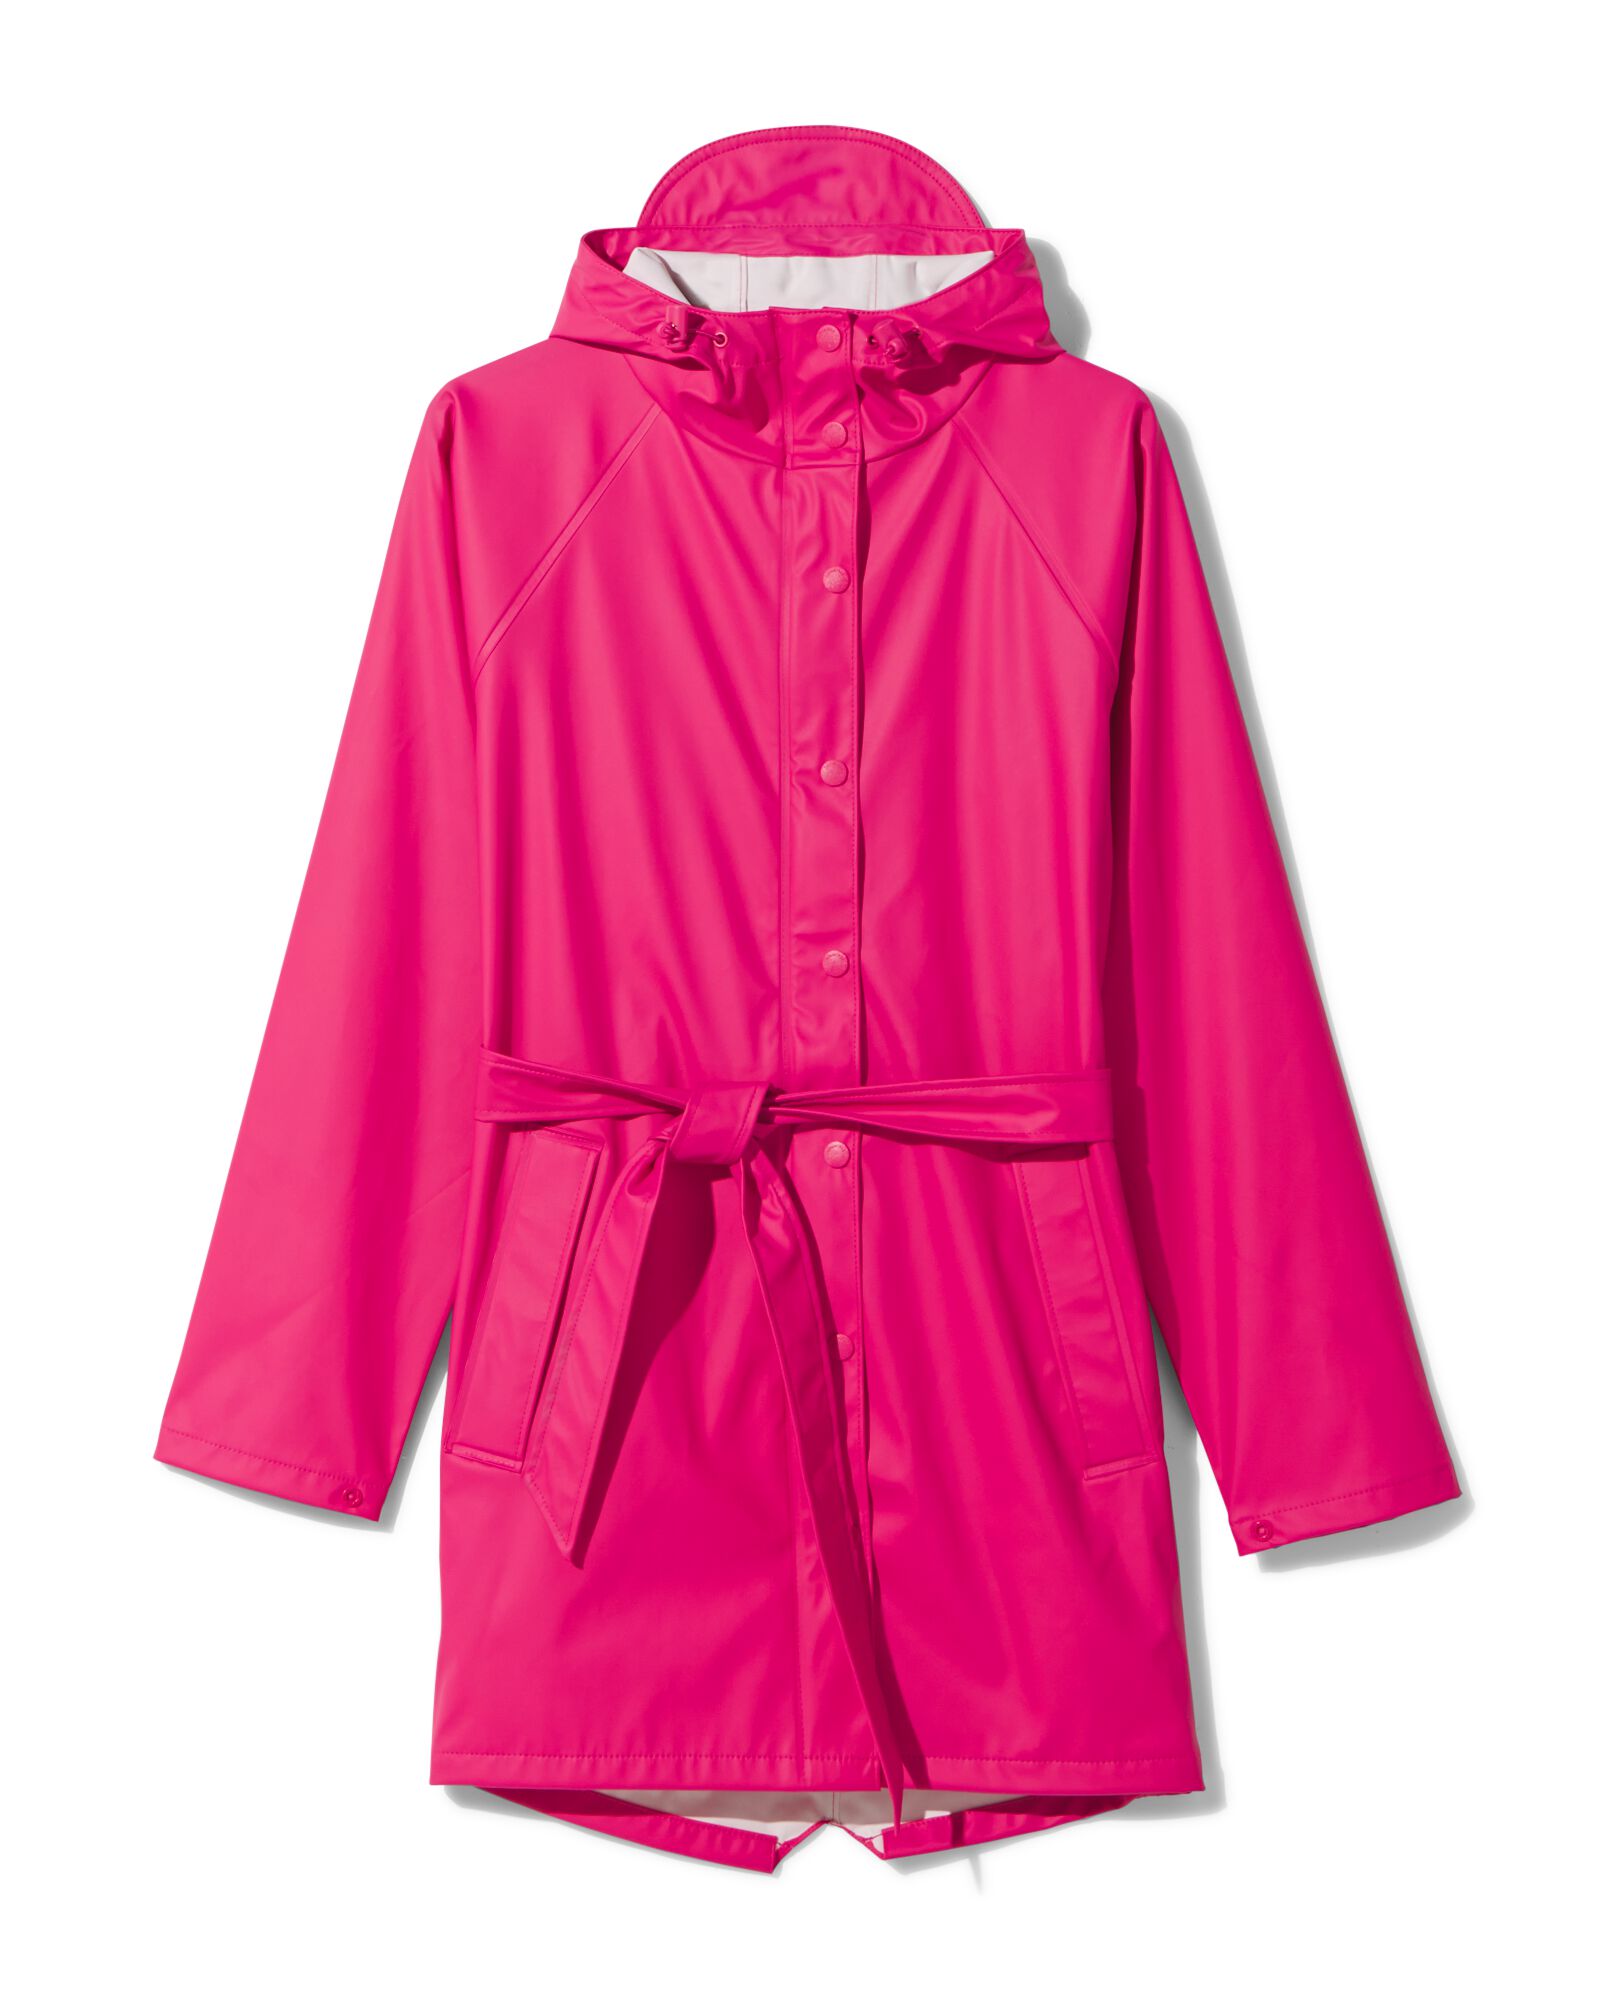 manteau imperméable femme rose S - 34460011 - HEMA